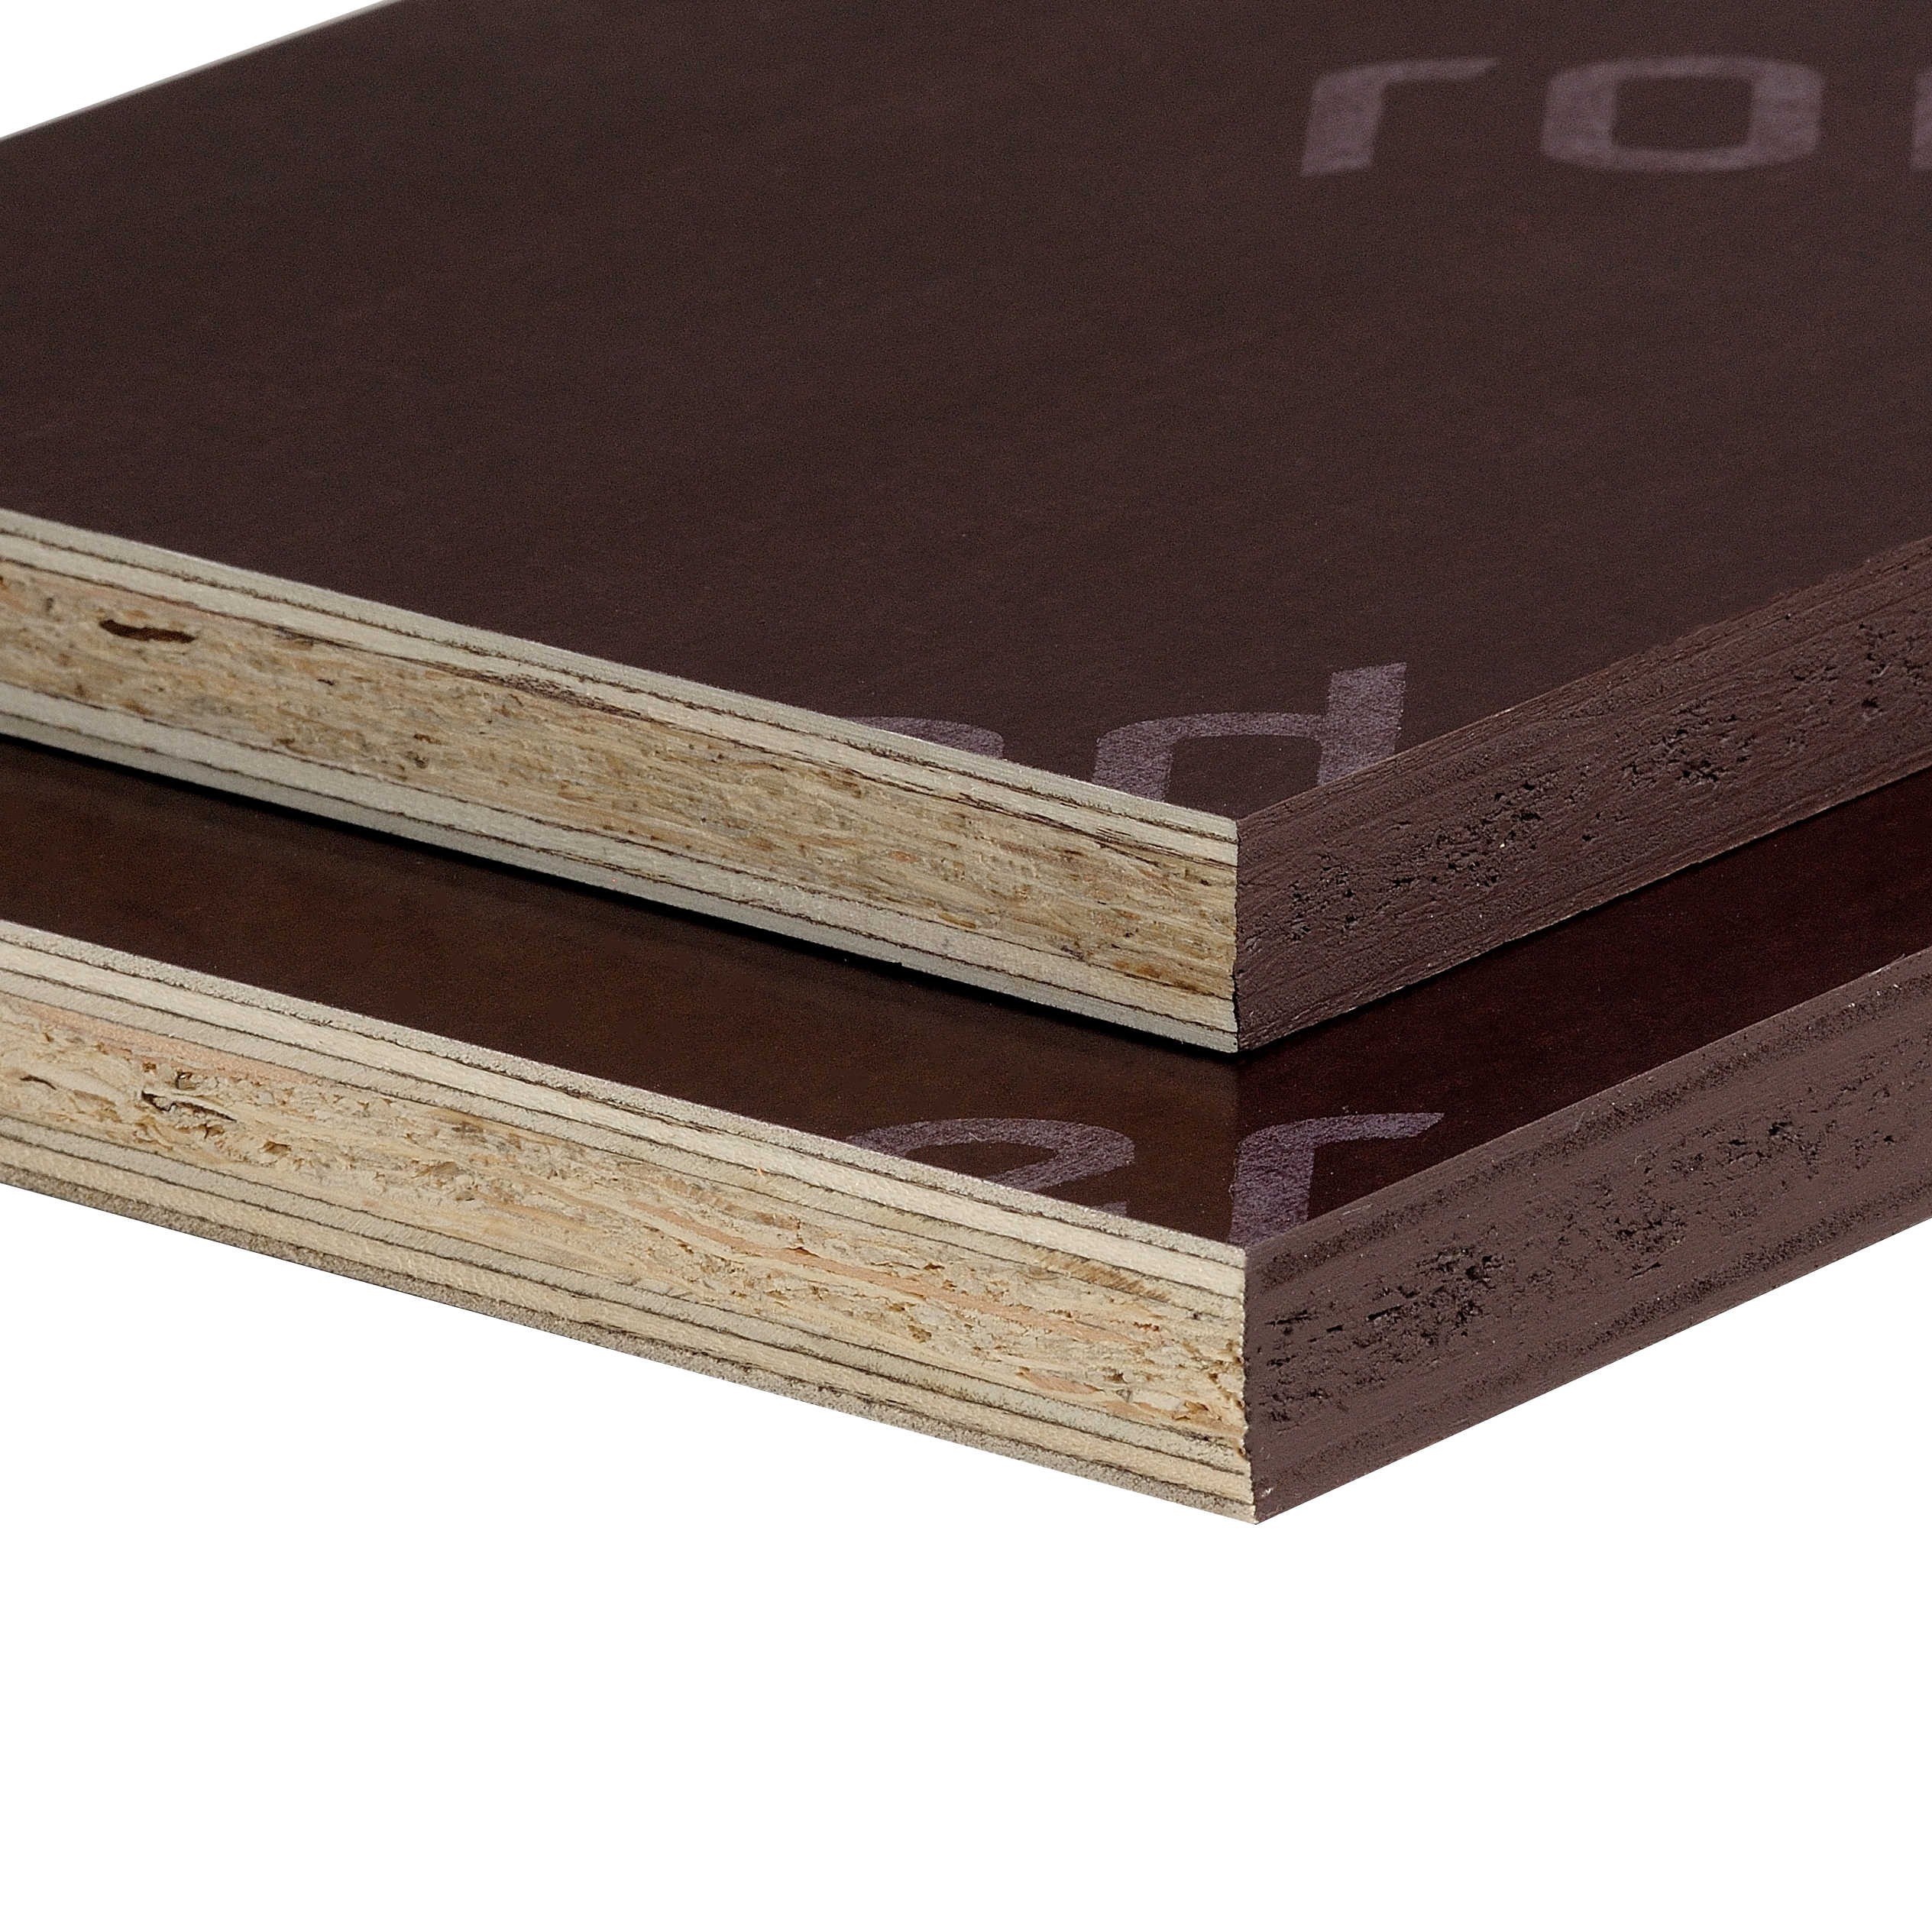 Plywood - TEGO formwork plywood 15 mm thickness, 1220 x 2440 mm class B, https:maxbau.ro